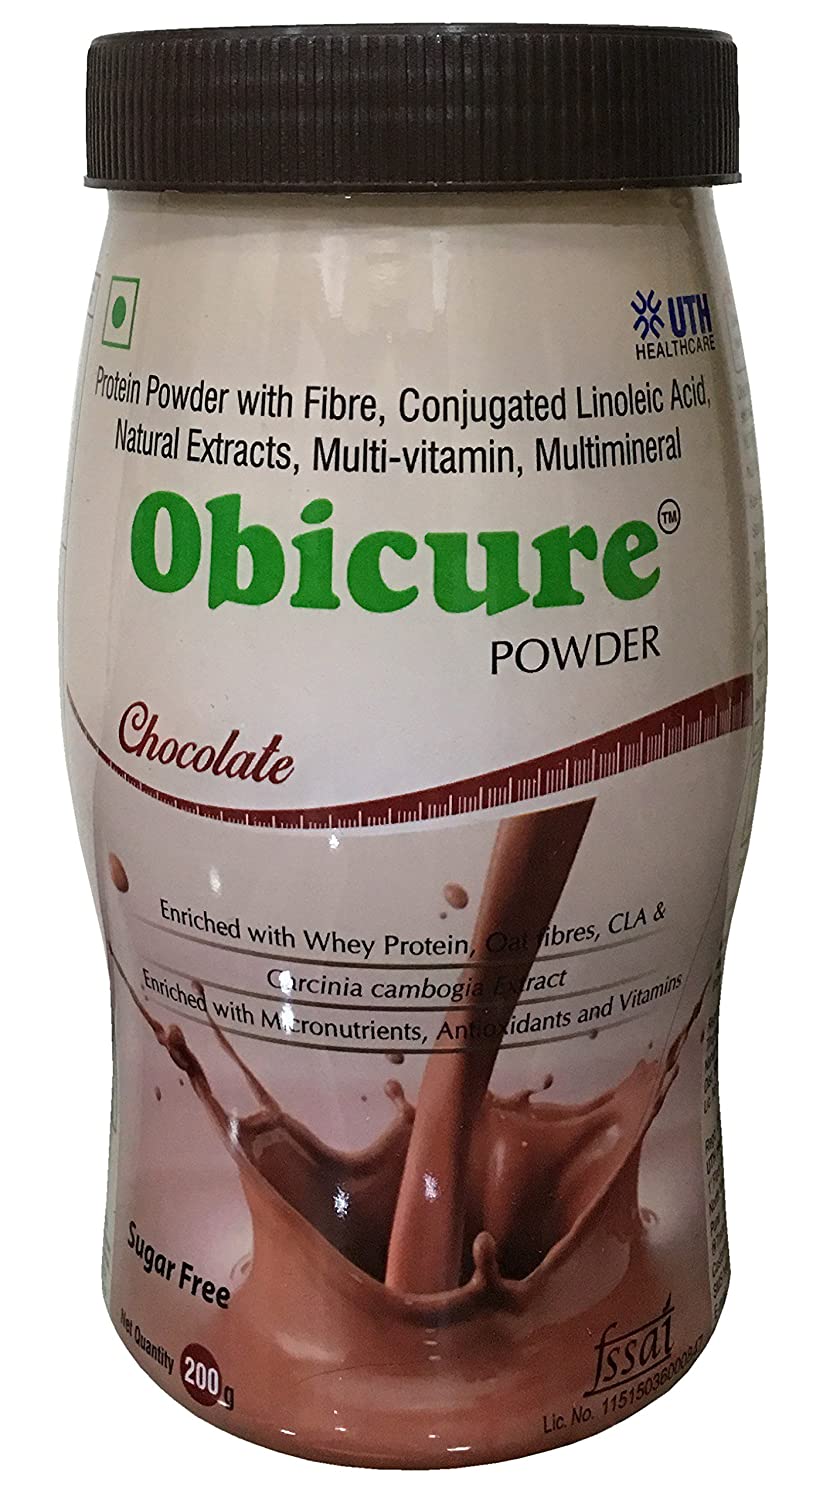 Obicure Sugar Free Chocolate Flavoured Powder, 200 gm Jar, Pack of 1 